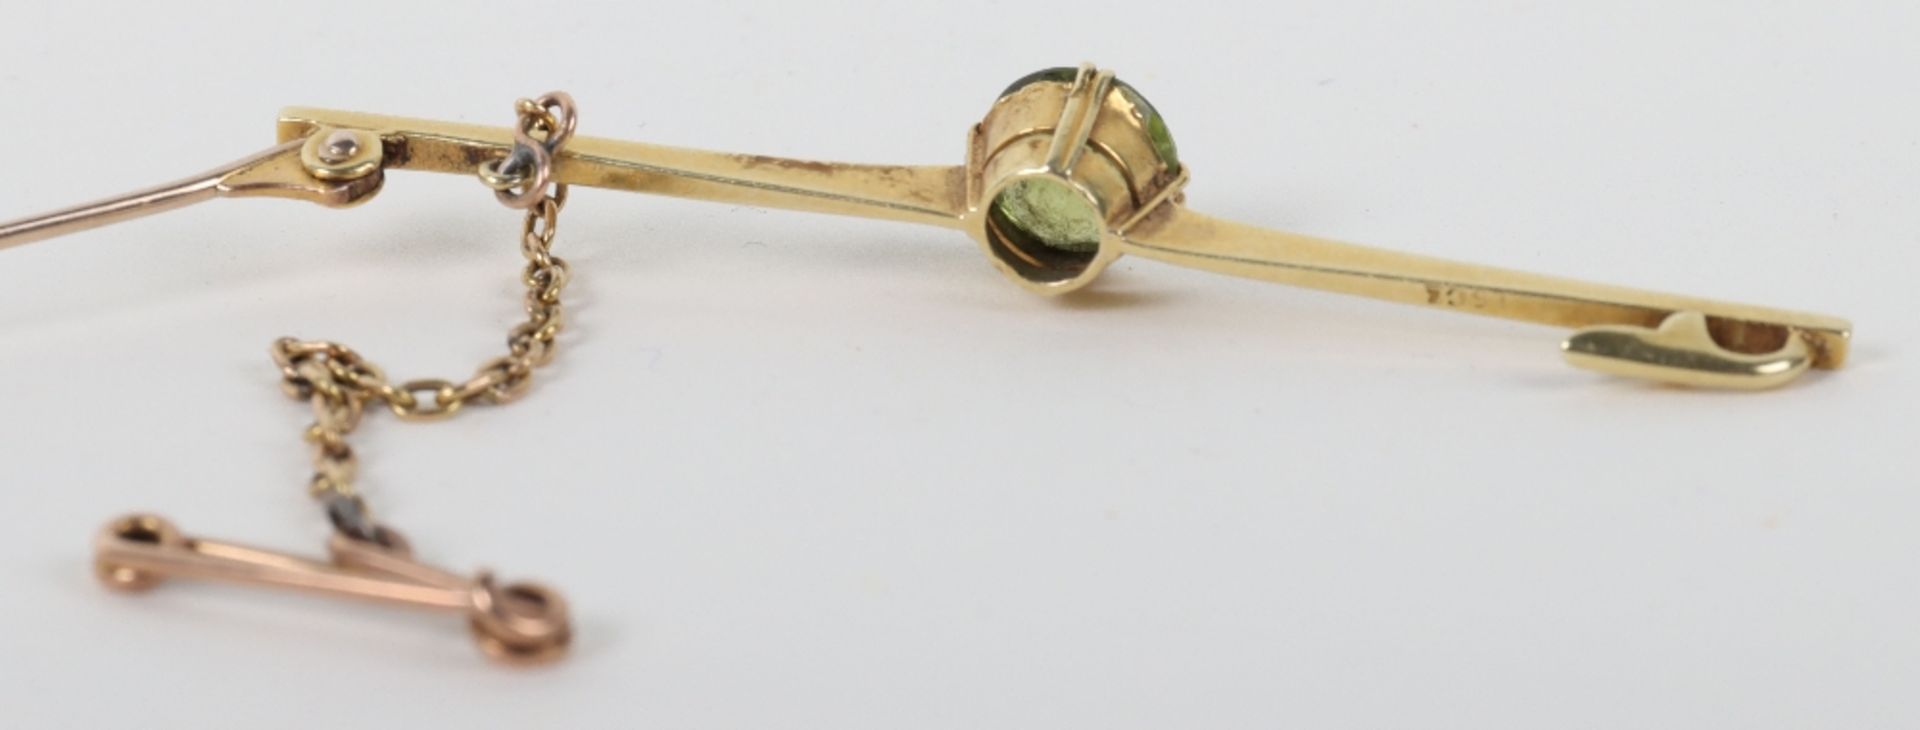 A 15ct gold and peridot set brooch - Image 2 of 2